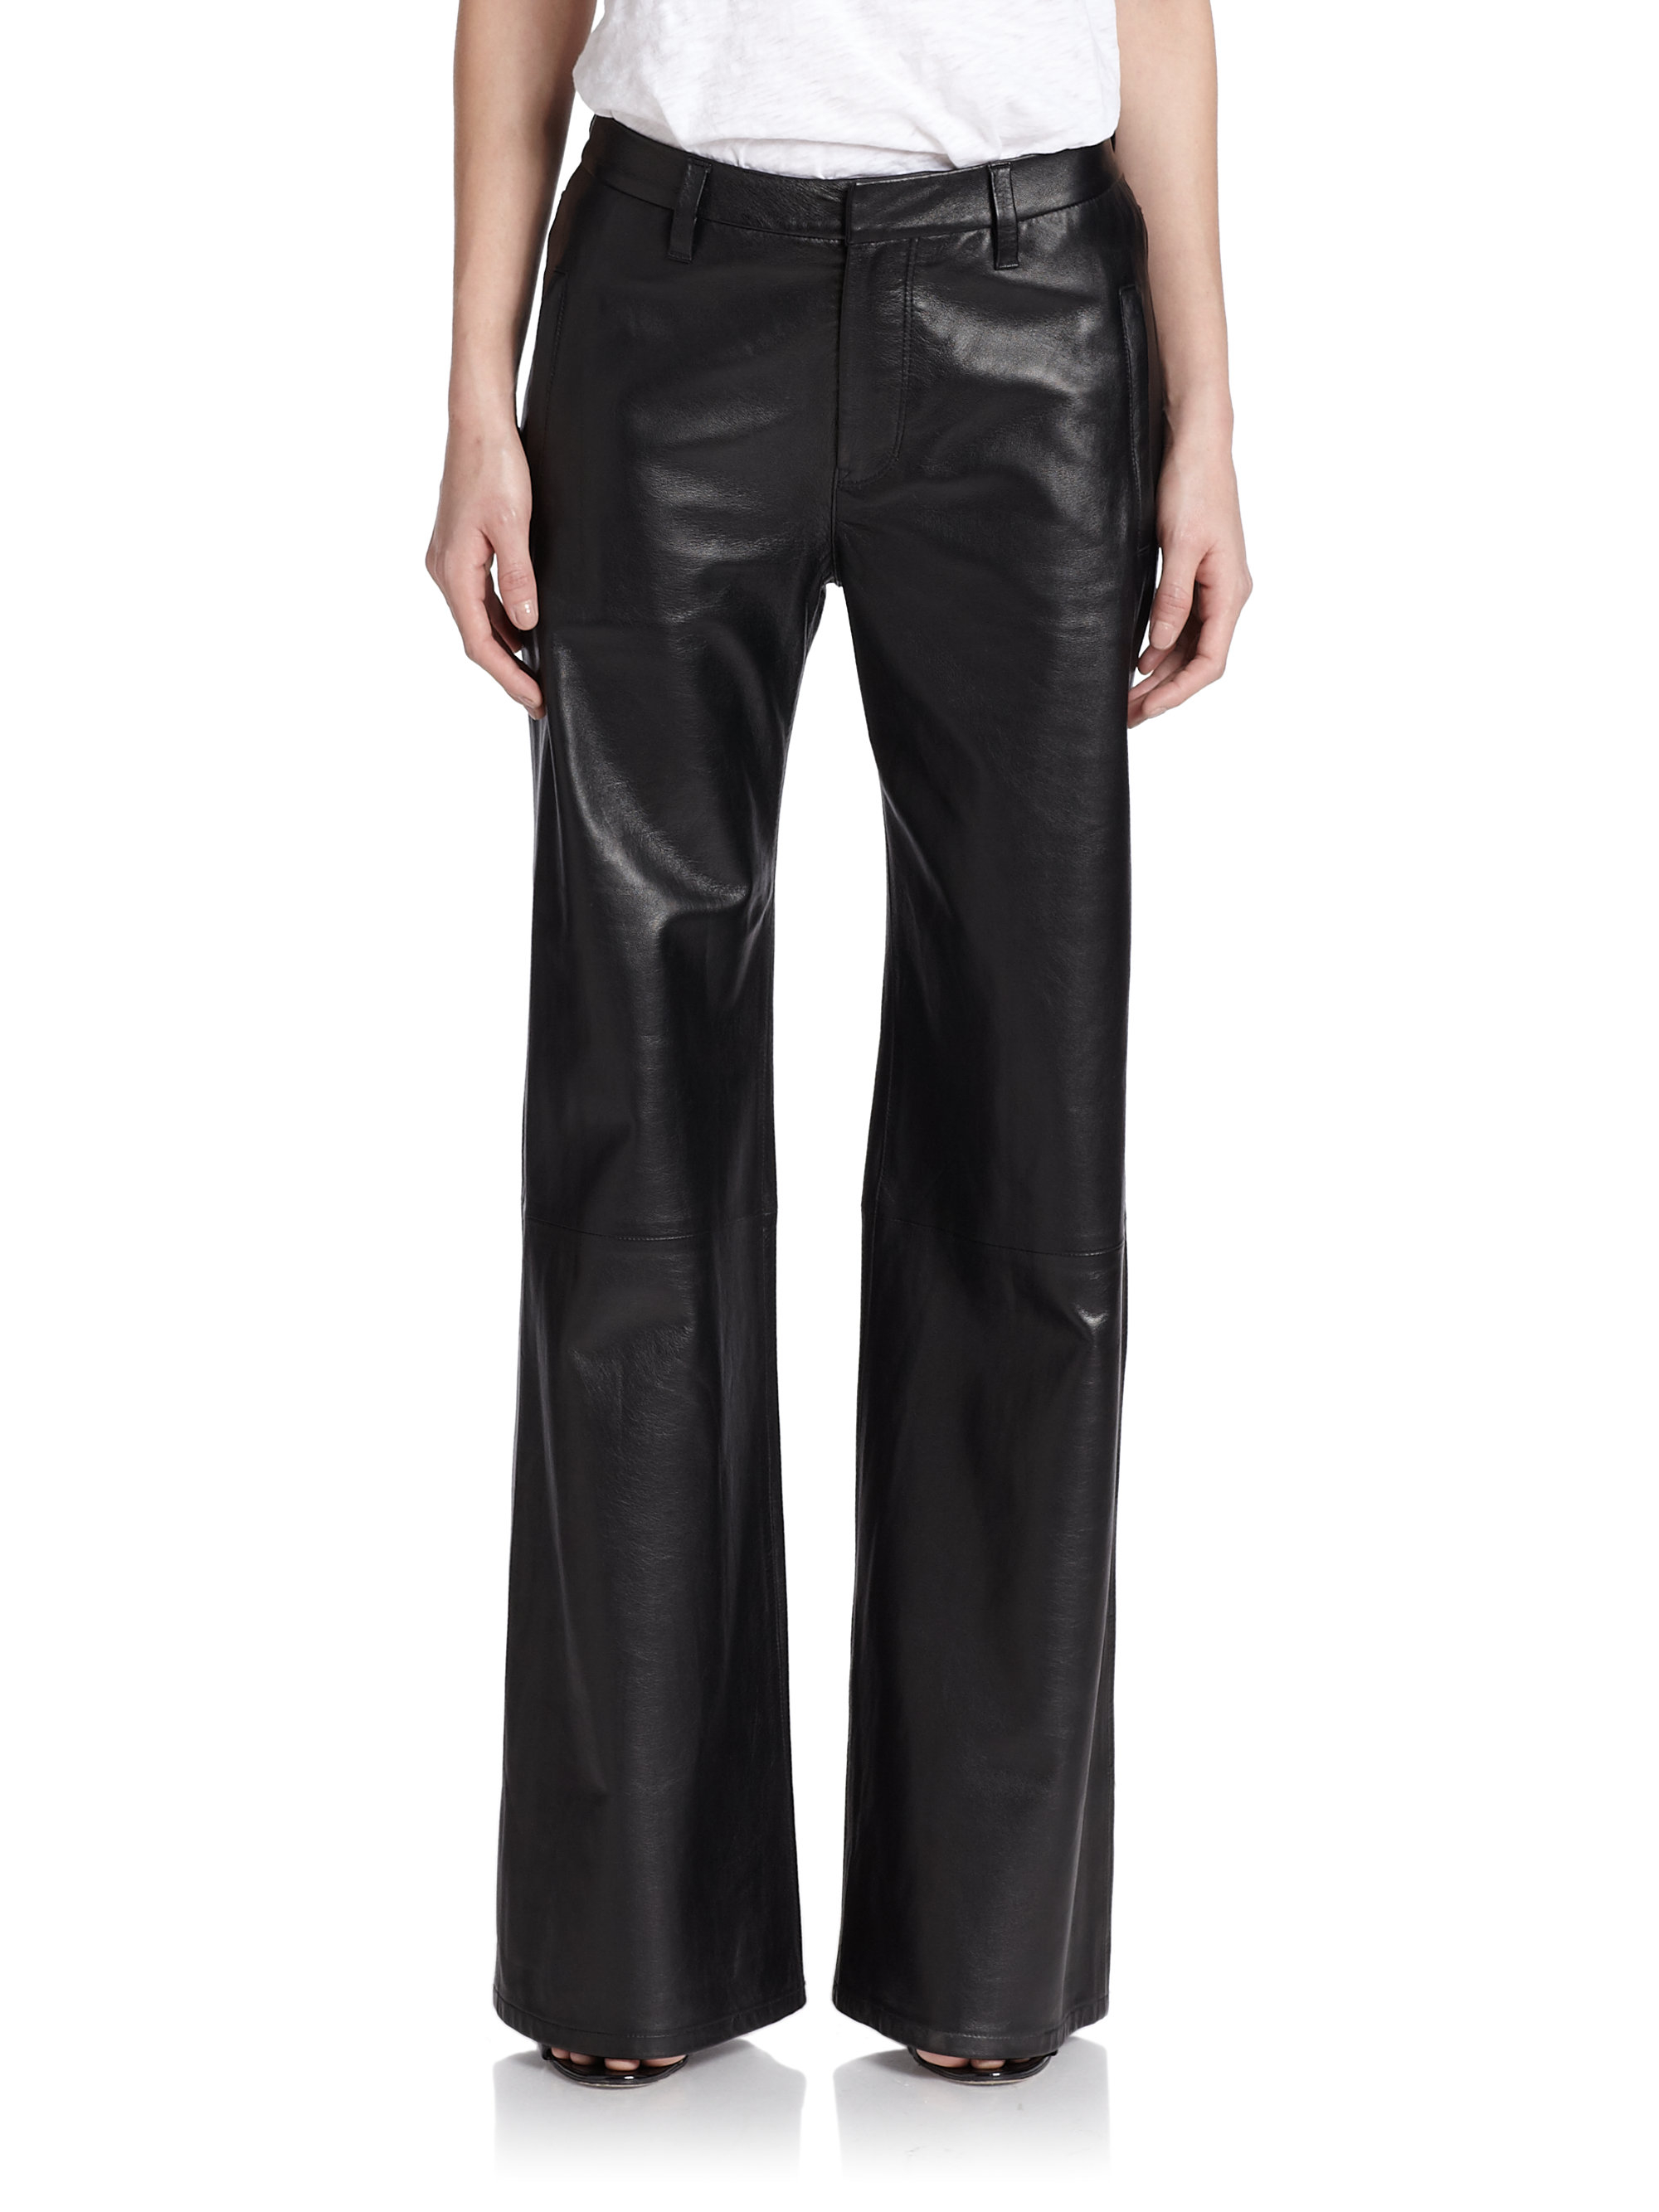 J brand Carine Wide-Leg Leather Pants in Black | Lyst